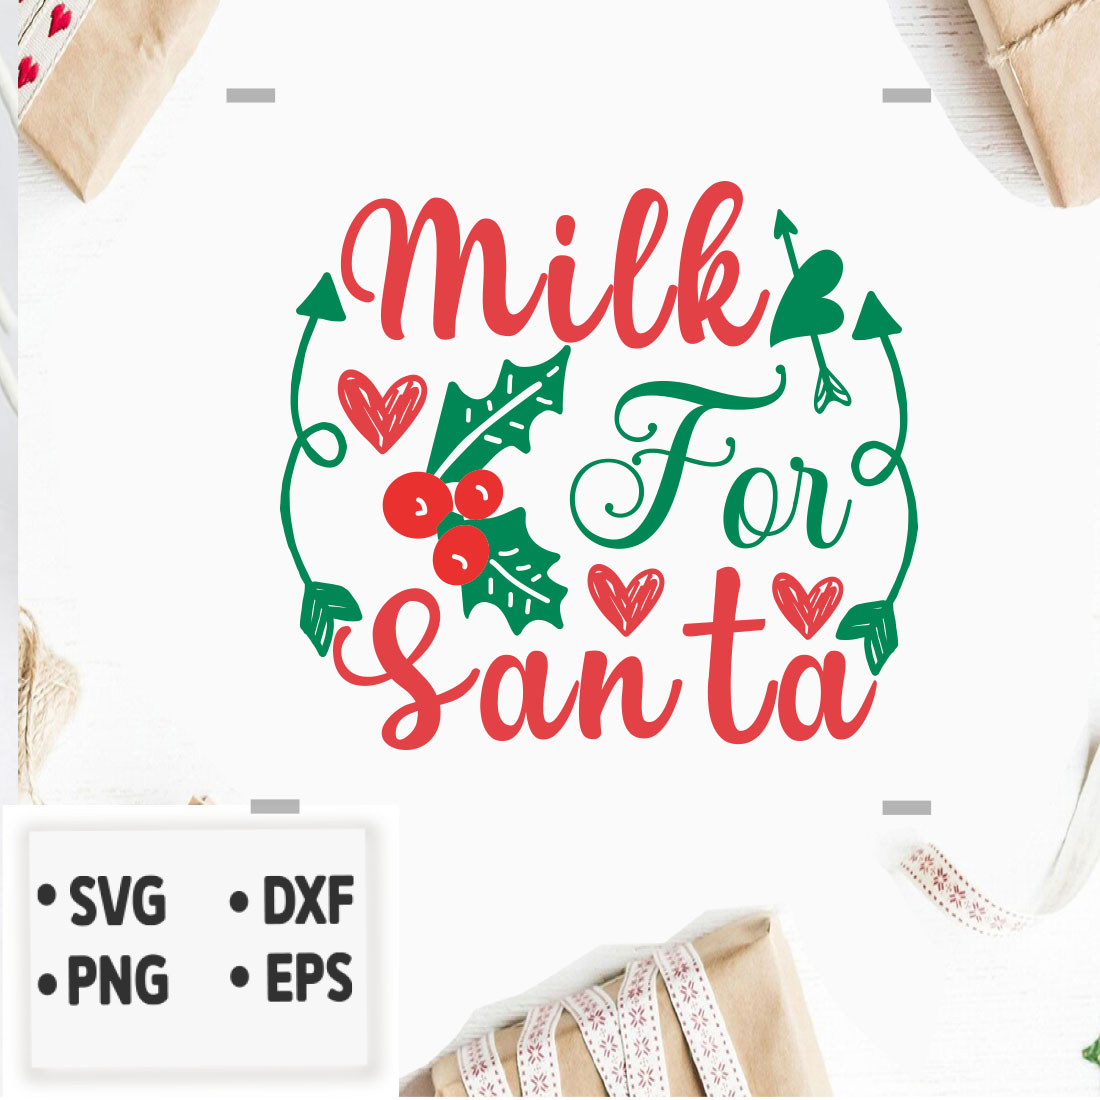 Image with amazing Milk for Santa print.